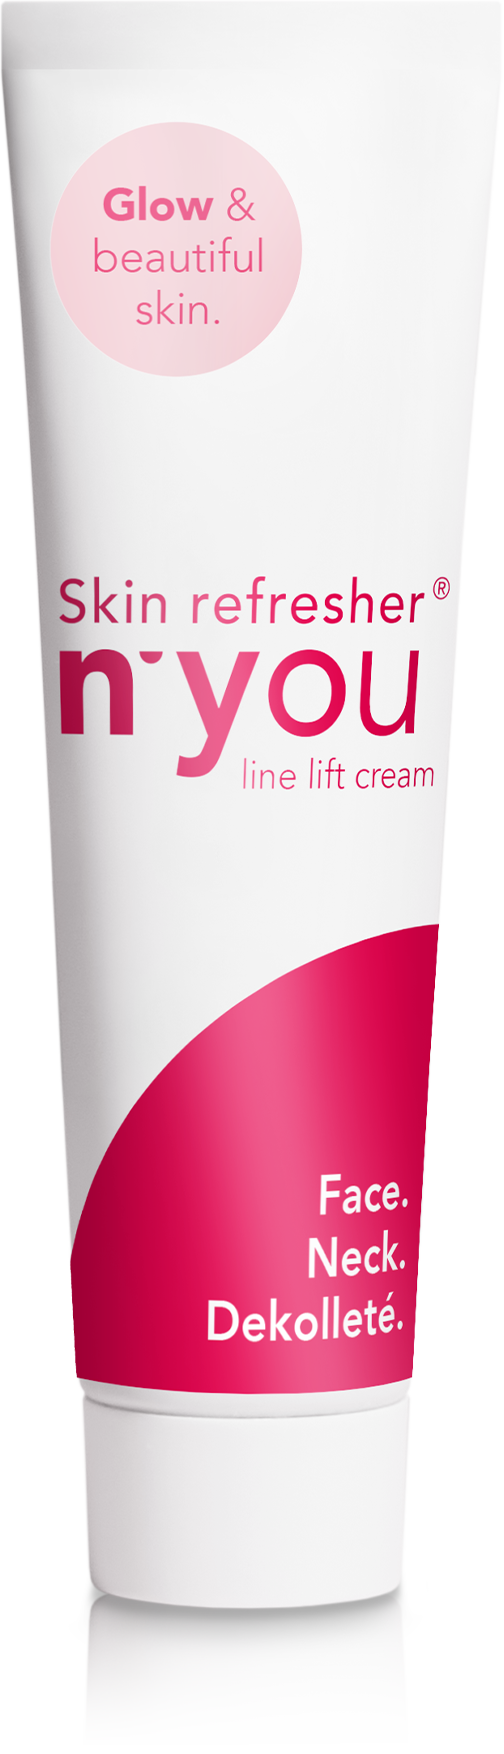 NYOU-skin-refresher